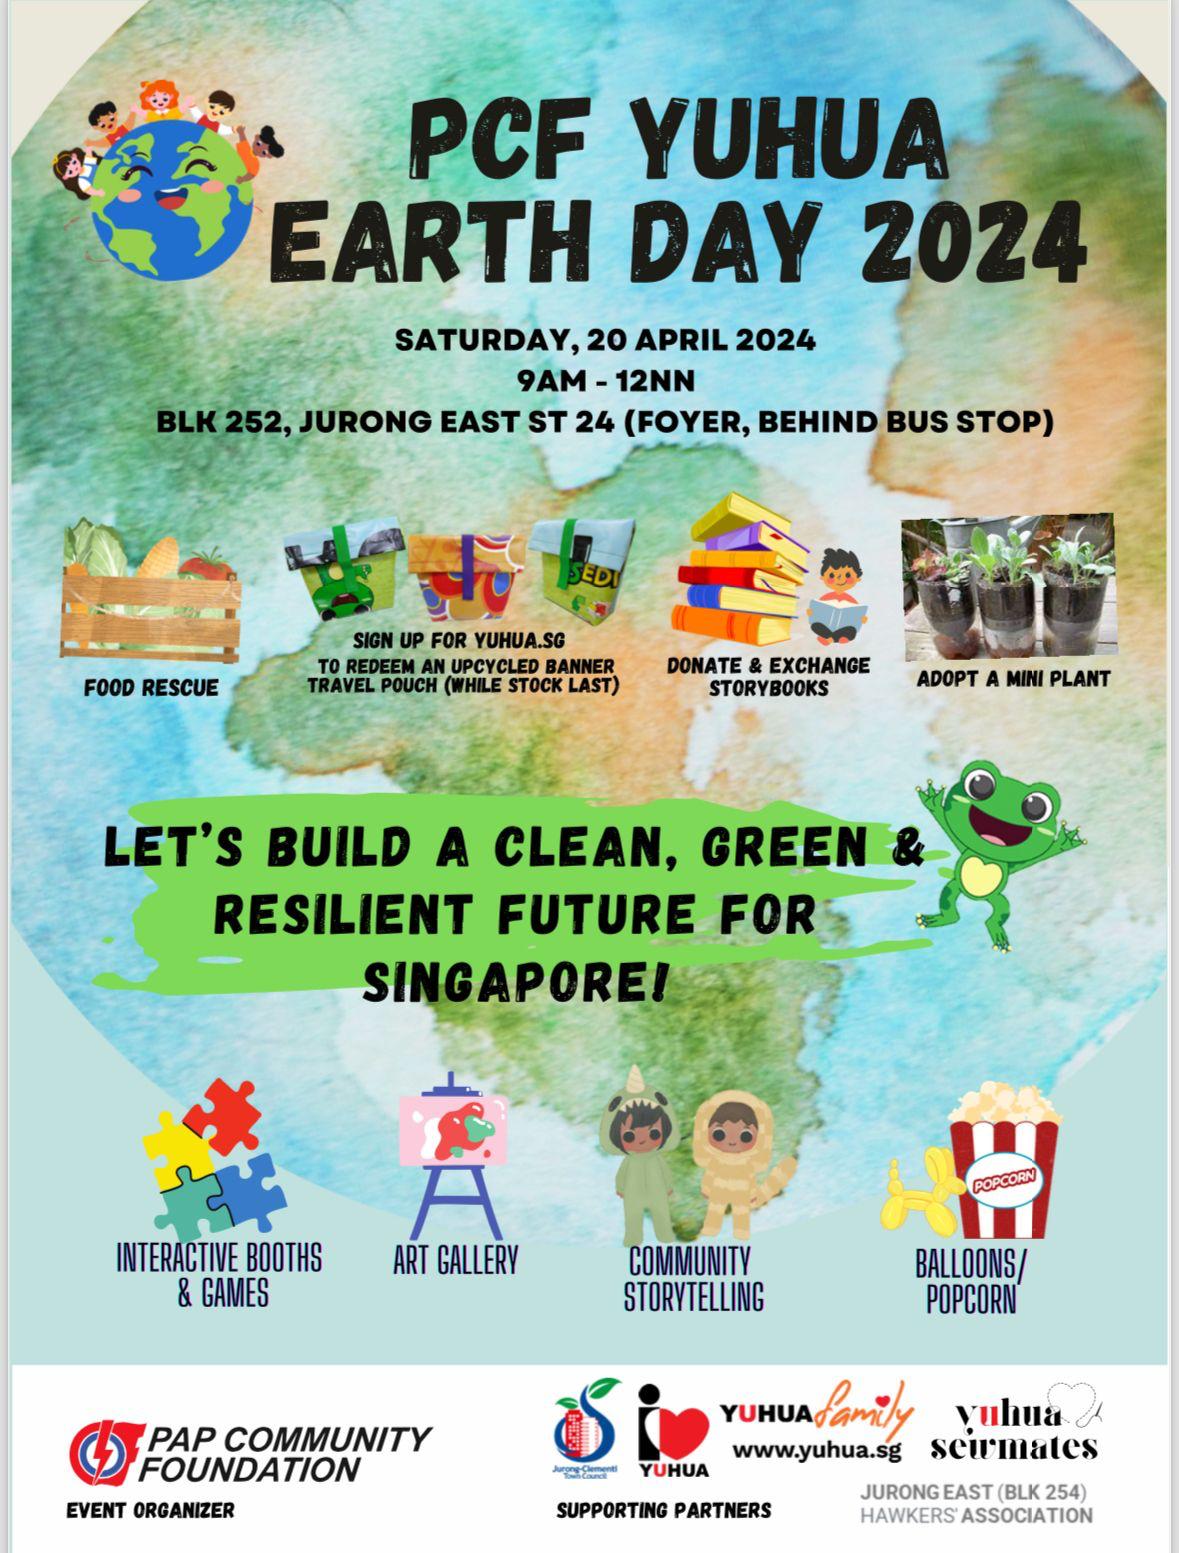 PCF Yuhua Earth Day 2024